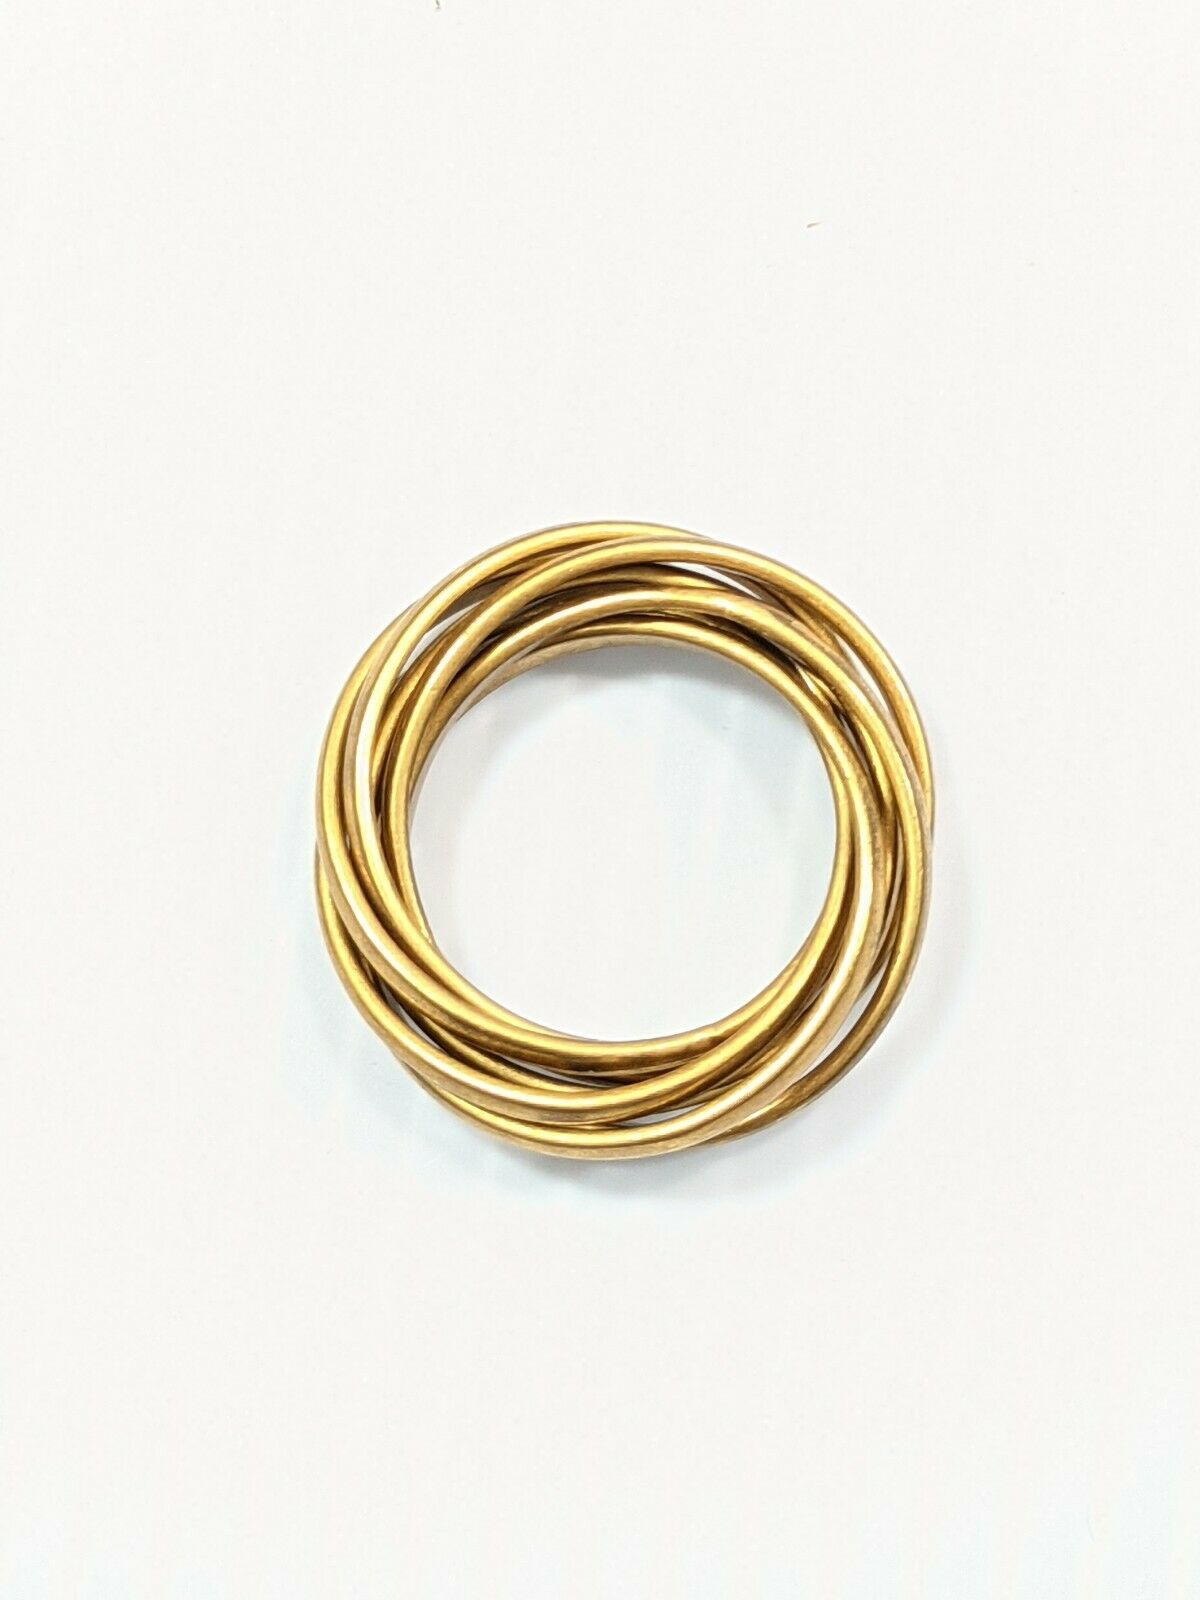 Vintage Gold Tone Interlocking Band Ring Size 6 Modern Minimalist